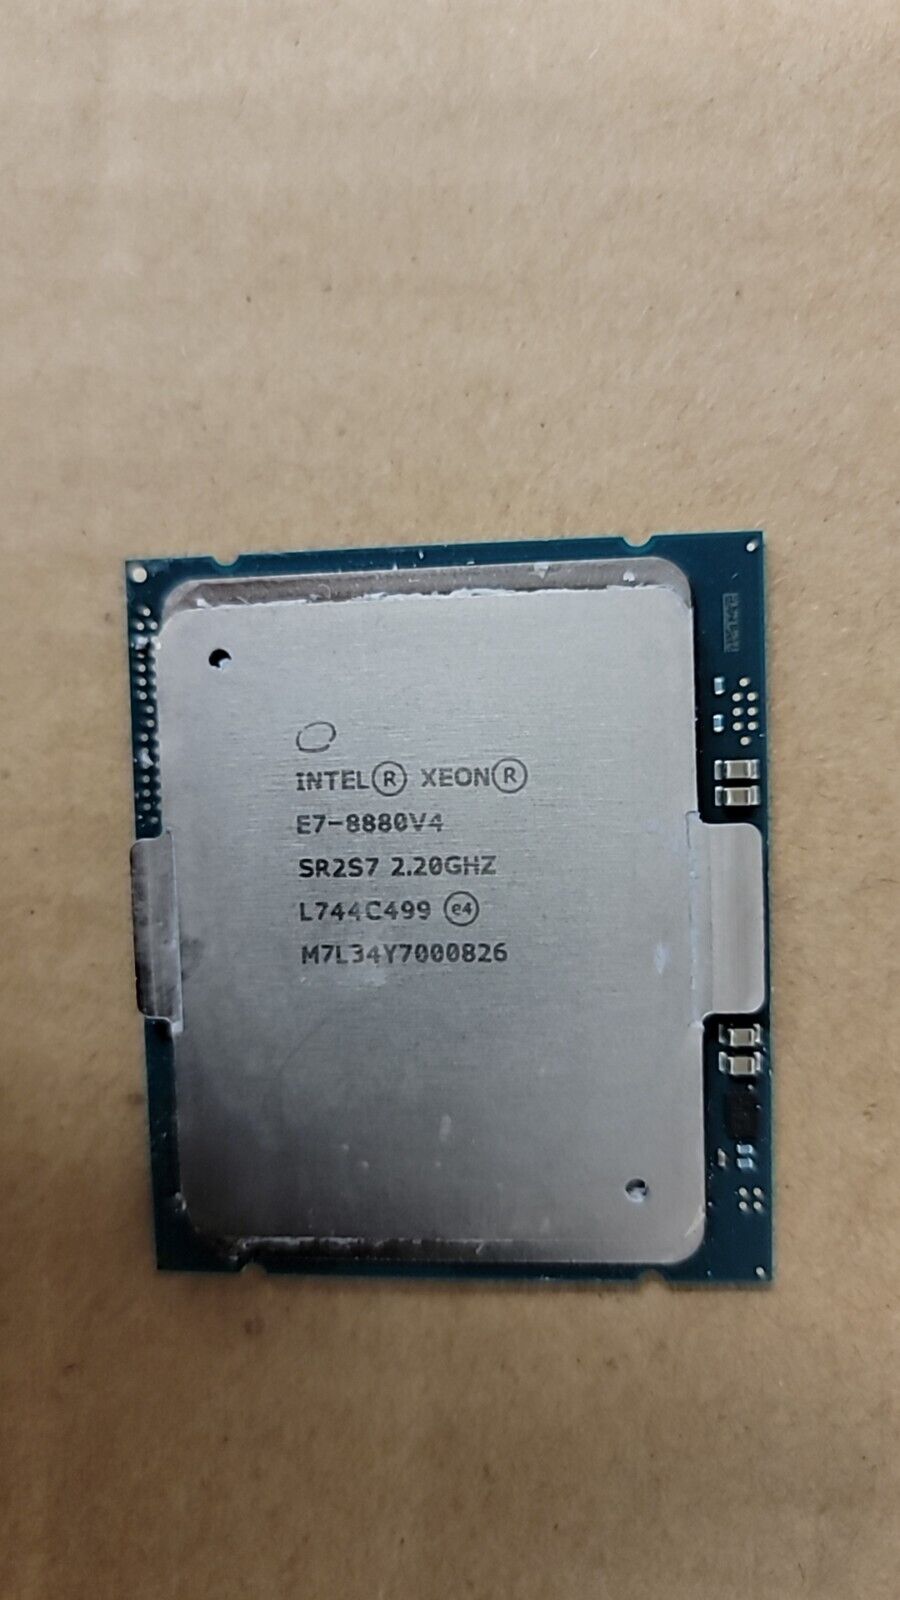 Intel Xeon E7-8880 v4 2.2GHz 55MB 22 Core SR2S7 LGA 2011-1 CPU Processor